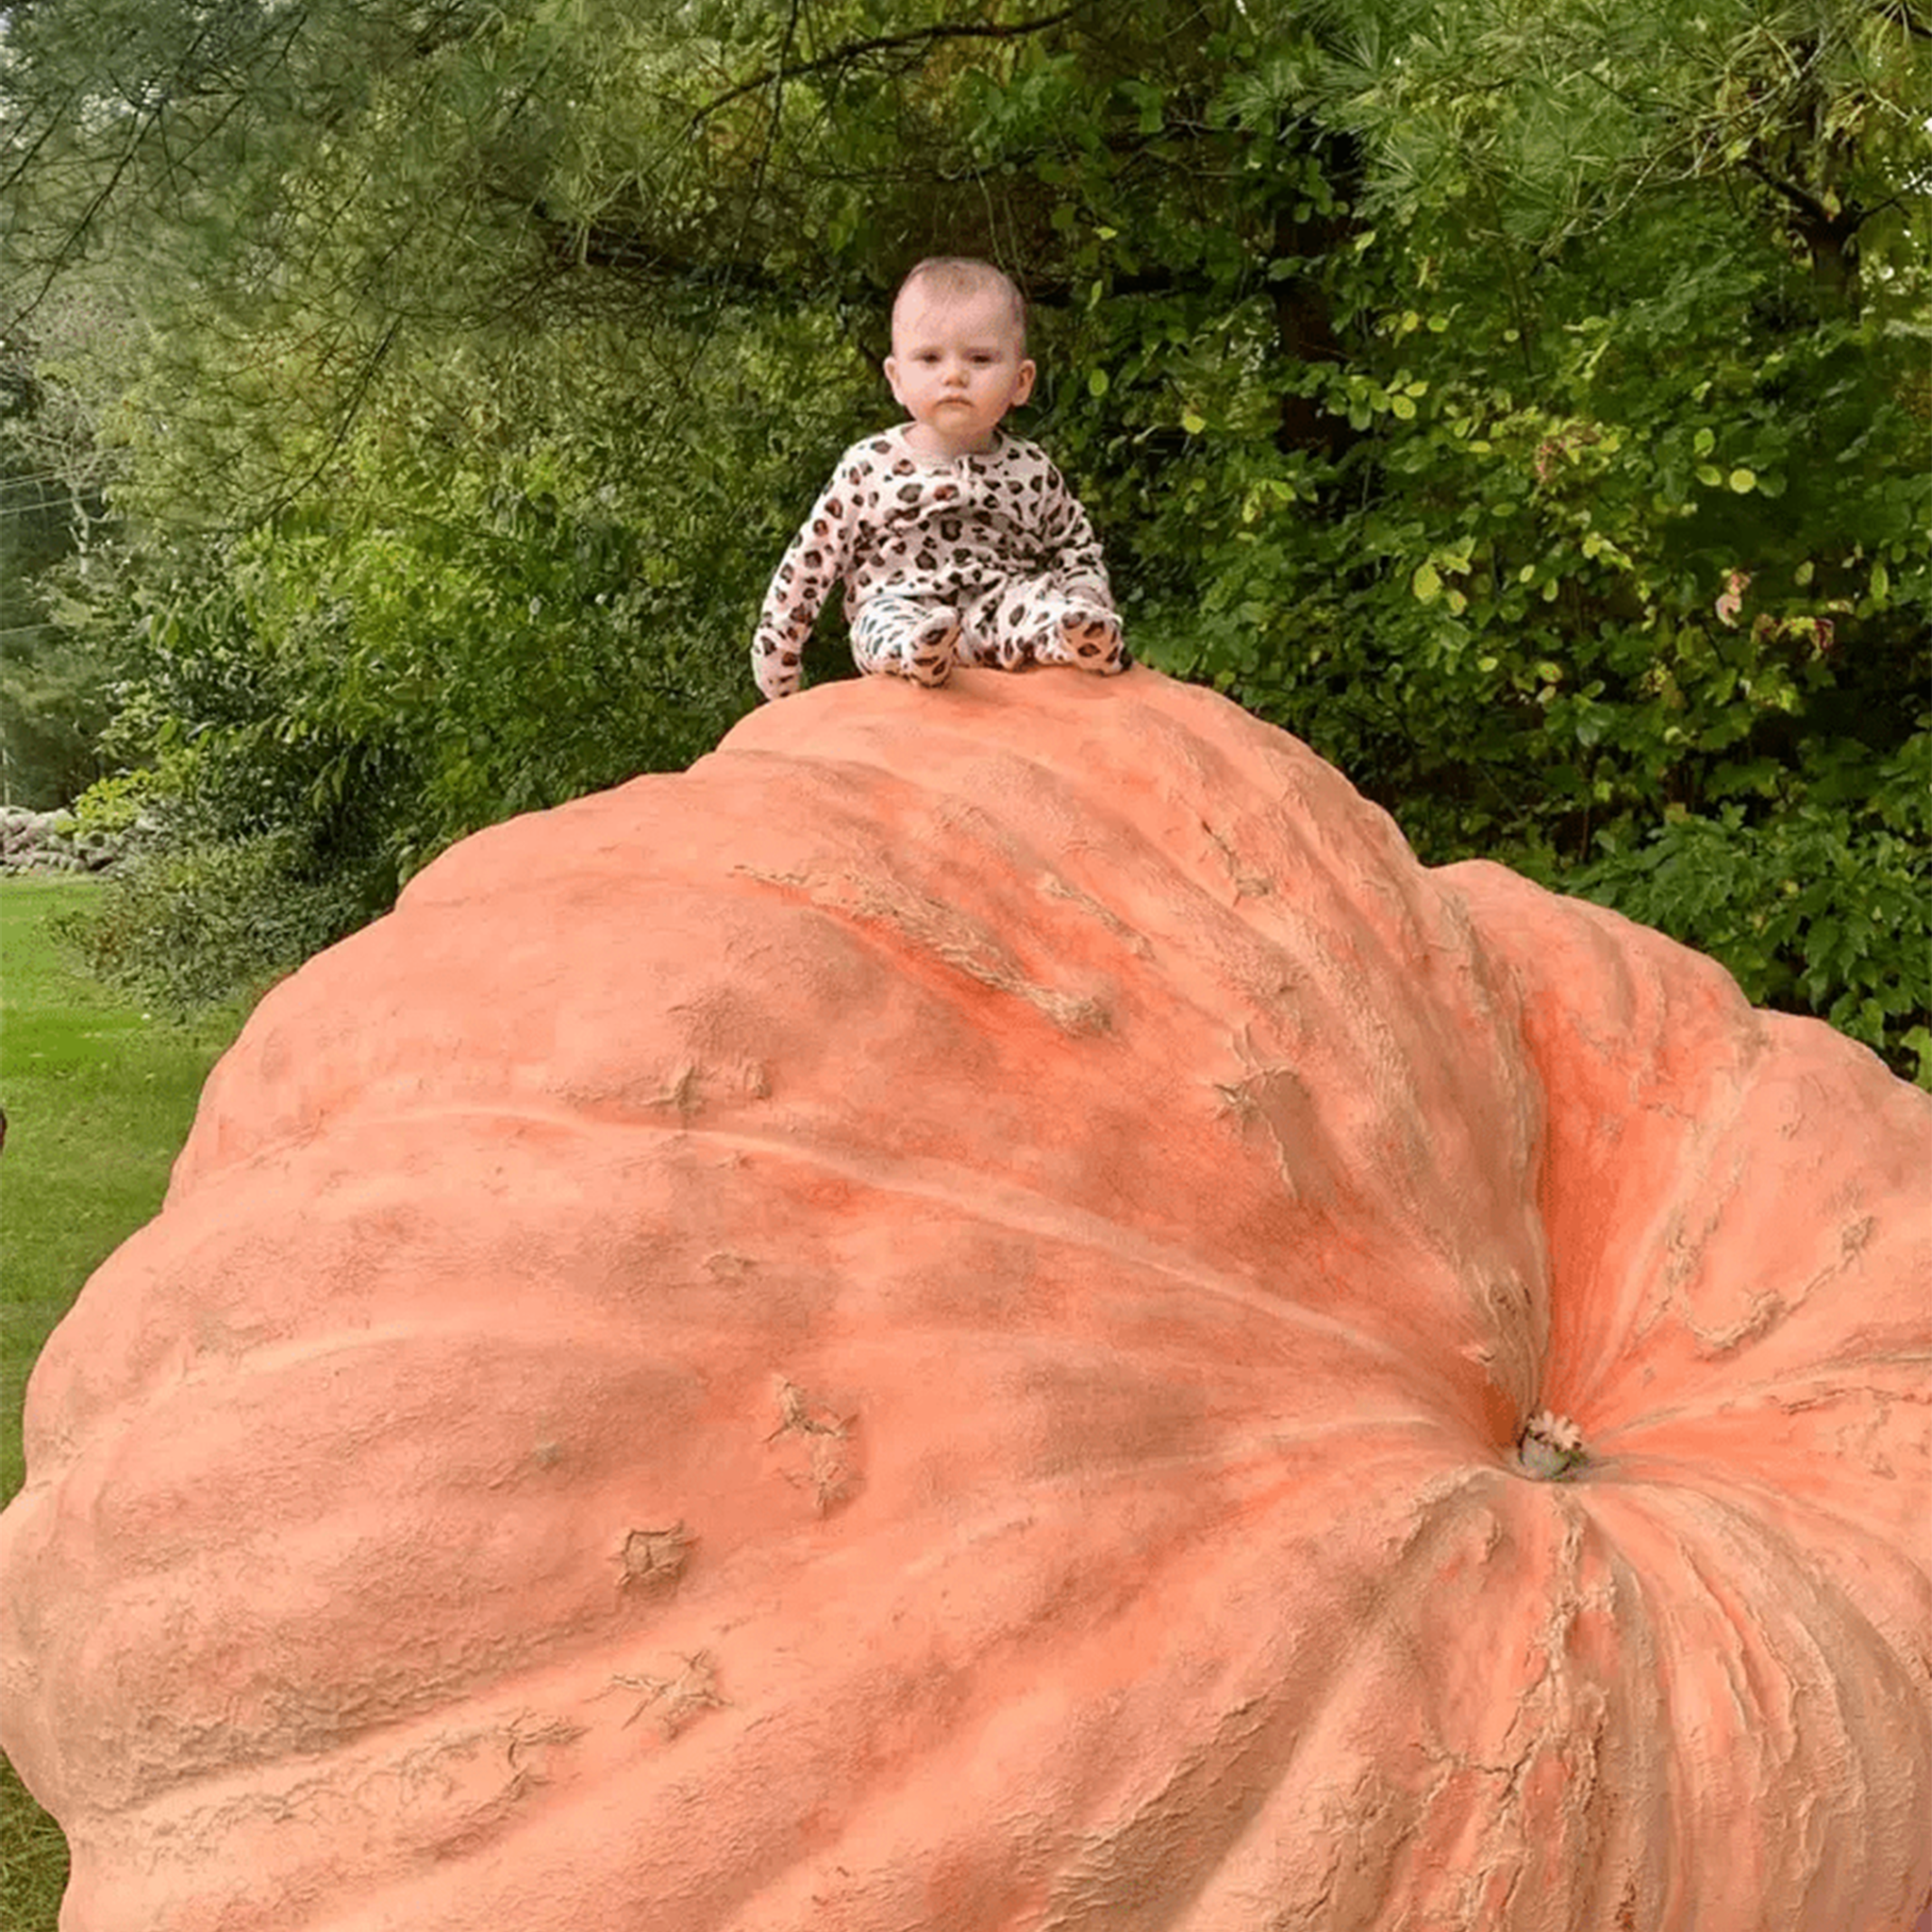 Baby on Giant Pumpkin